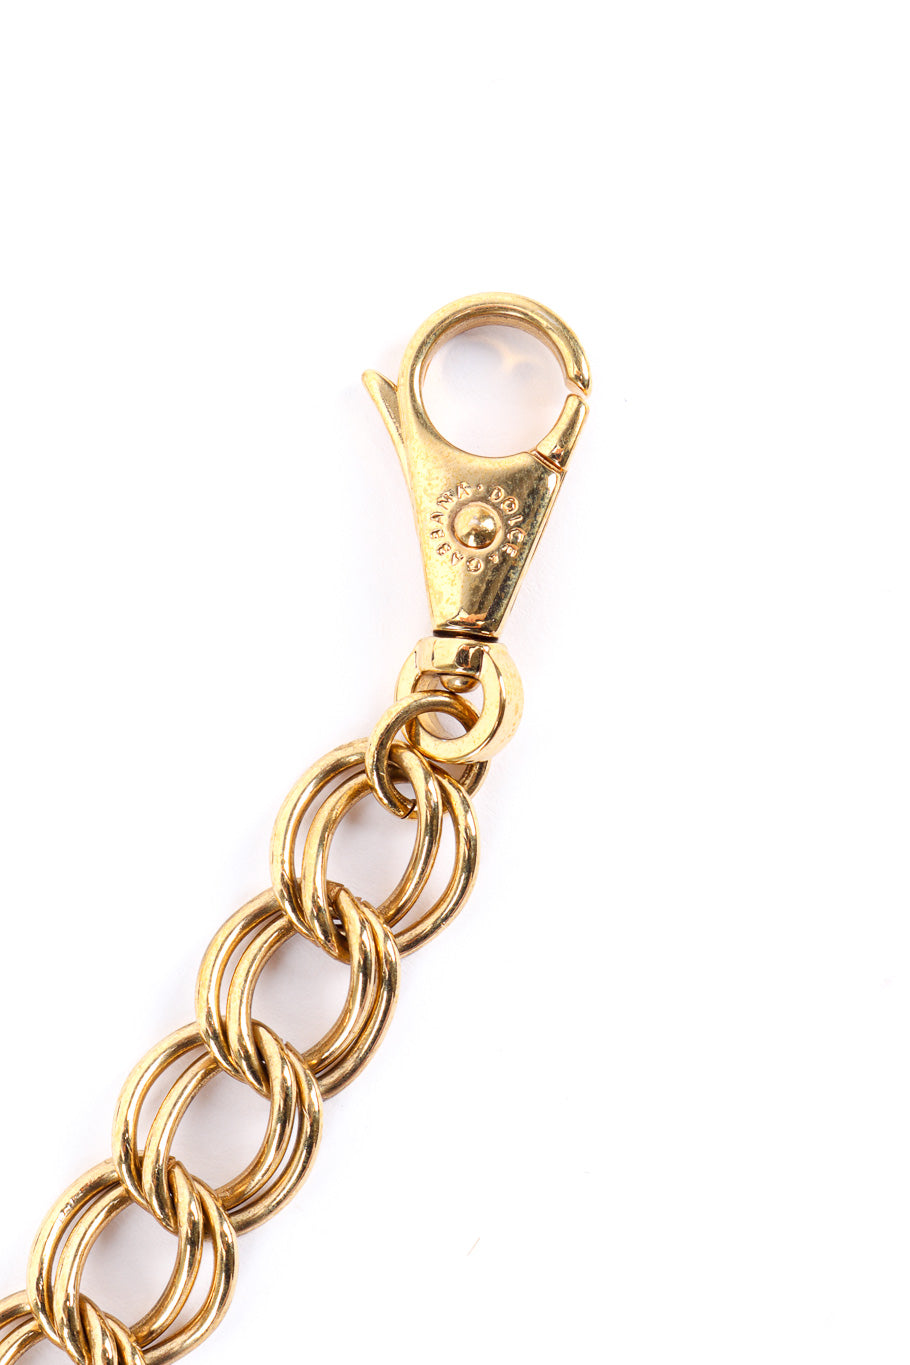 Dolce & Gabbana black rose chain belt clasp detail @recessla